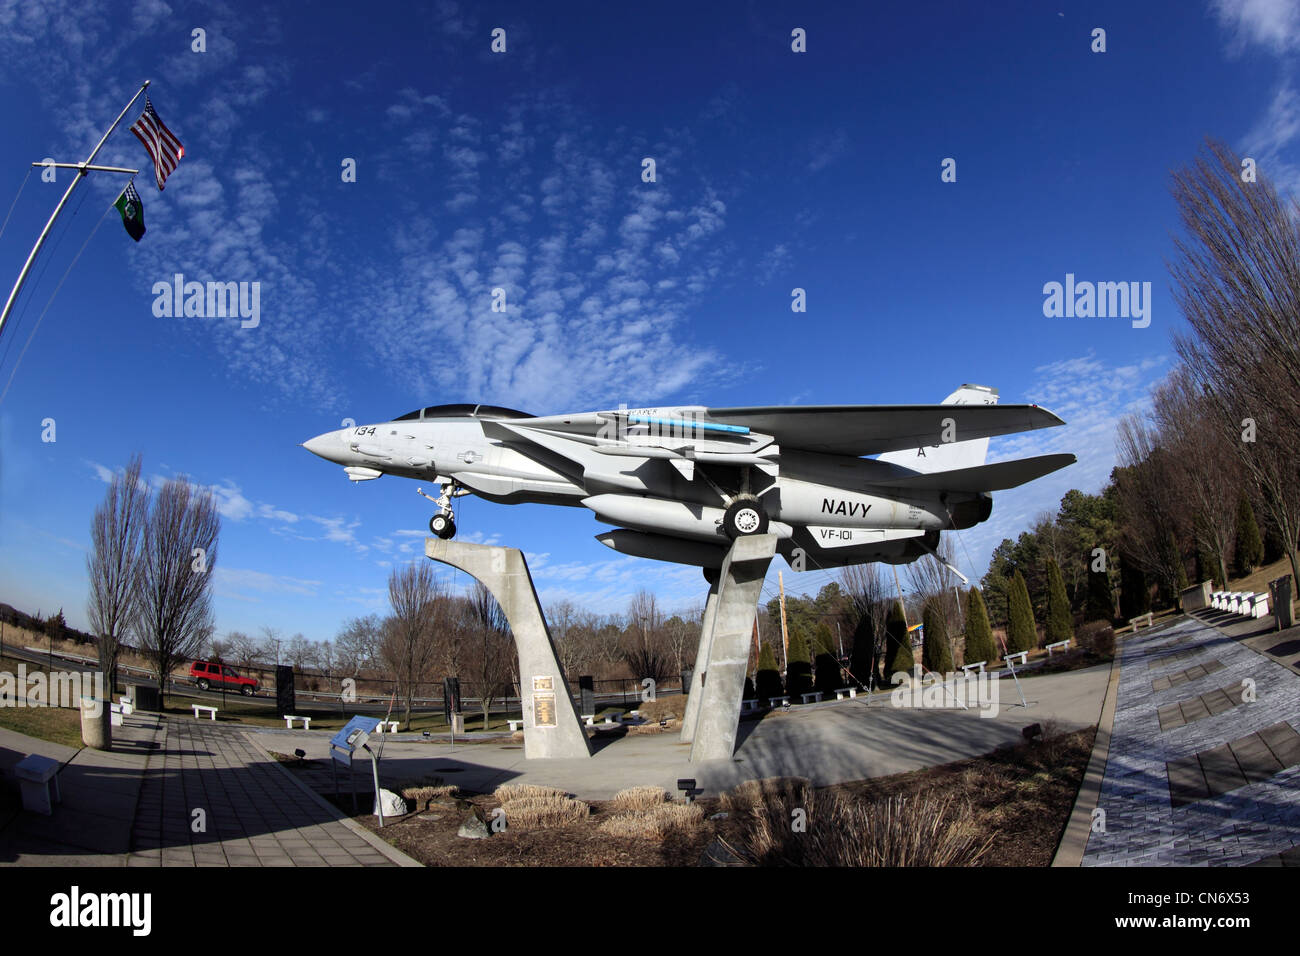 Grummna F-14 Tomcat Navy Fighter jet on display at Grumman Memorial Park Calverton Long Island NY Stock Photo